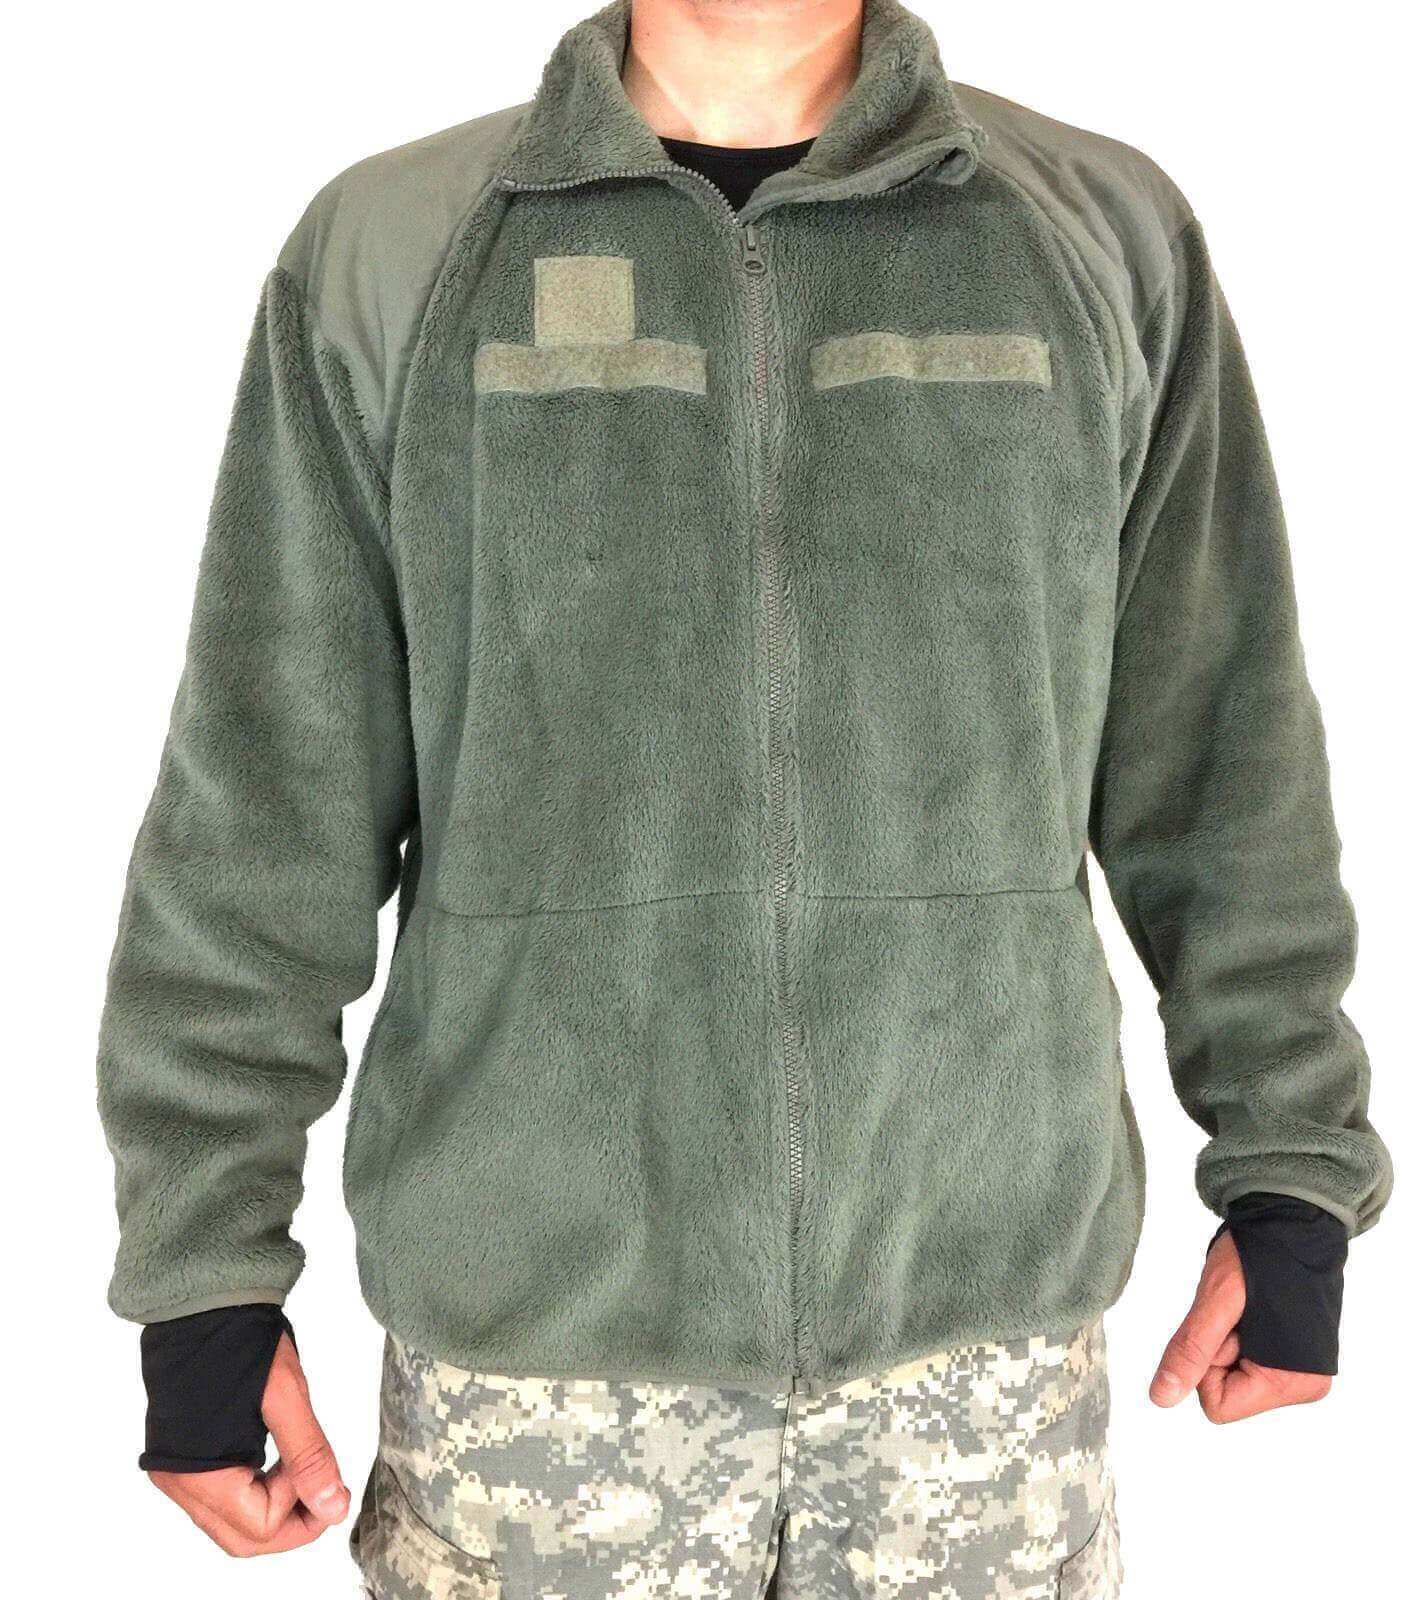 US Military Gen III Polartec Cold Weather Fleece Jacket VERY GOOD ALL SIZES 